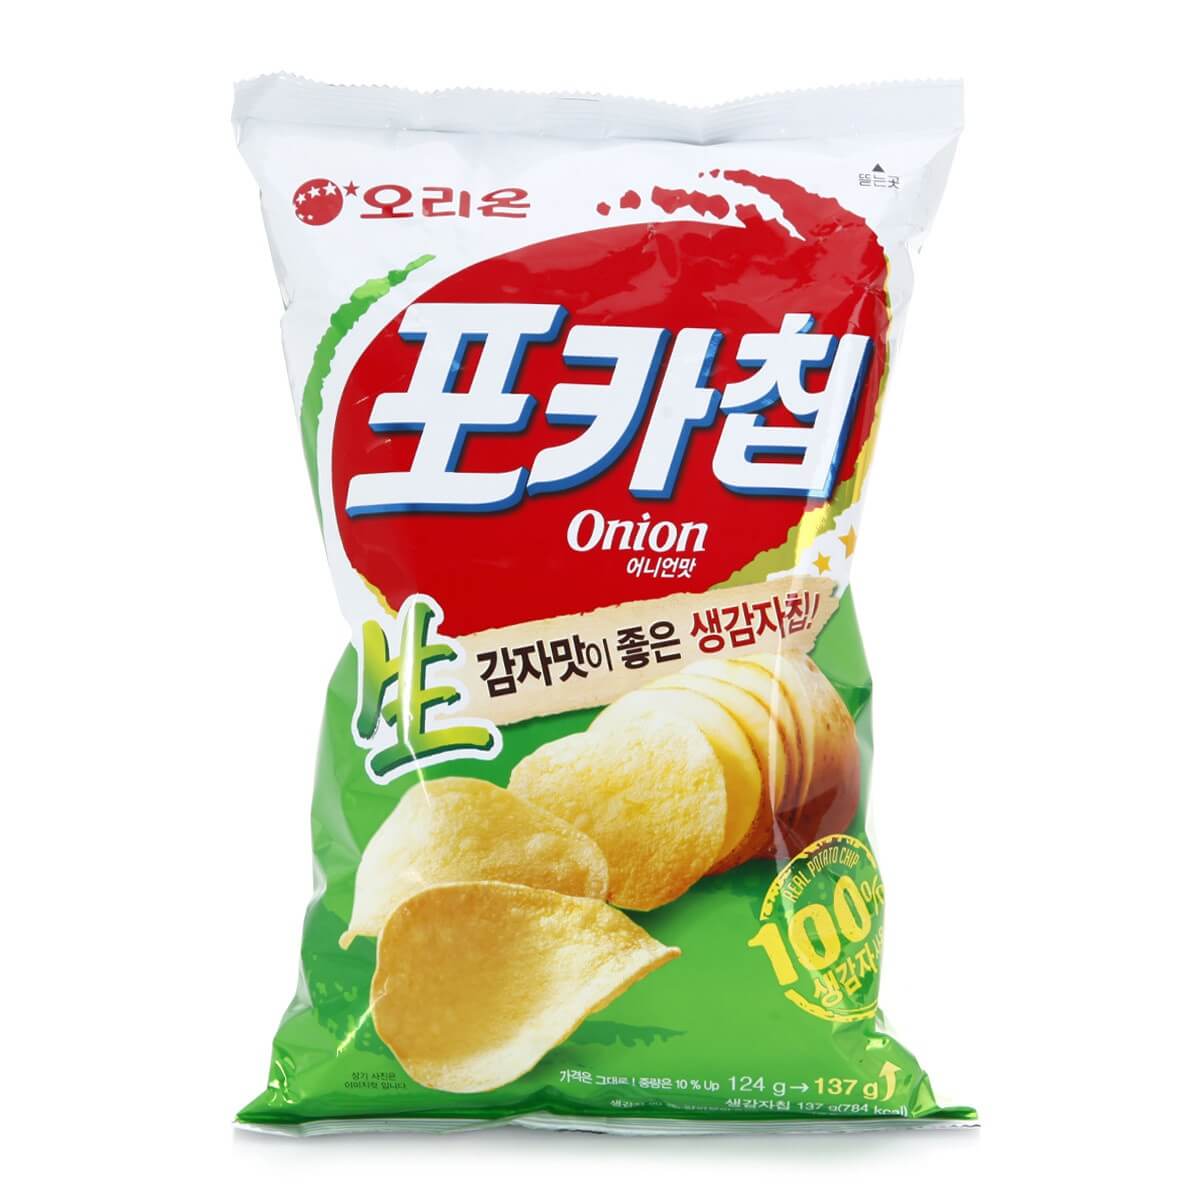 韓國食品-[Orion] Poka Chip[Onion] 60g